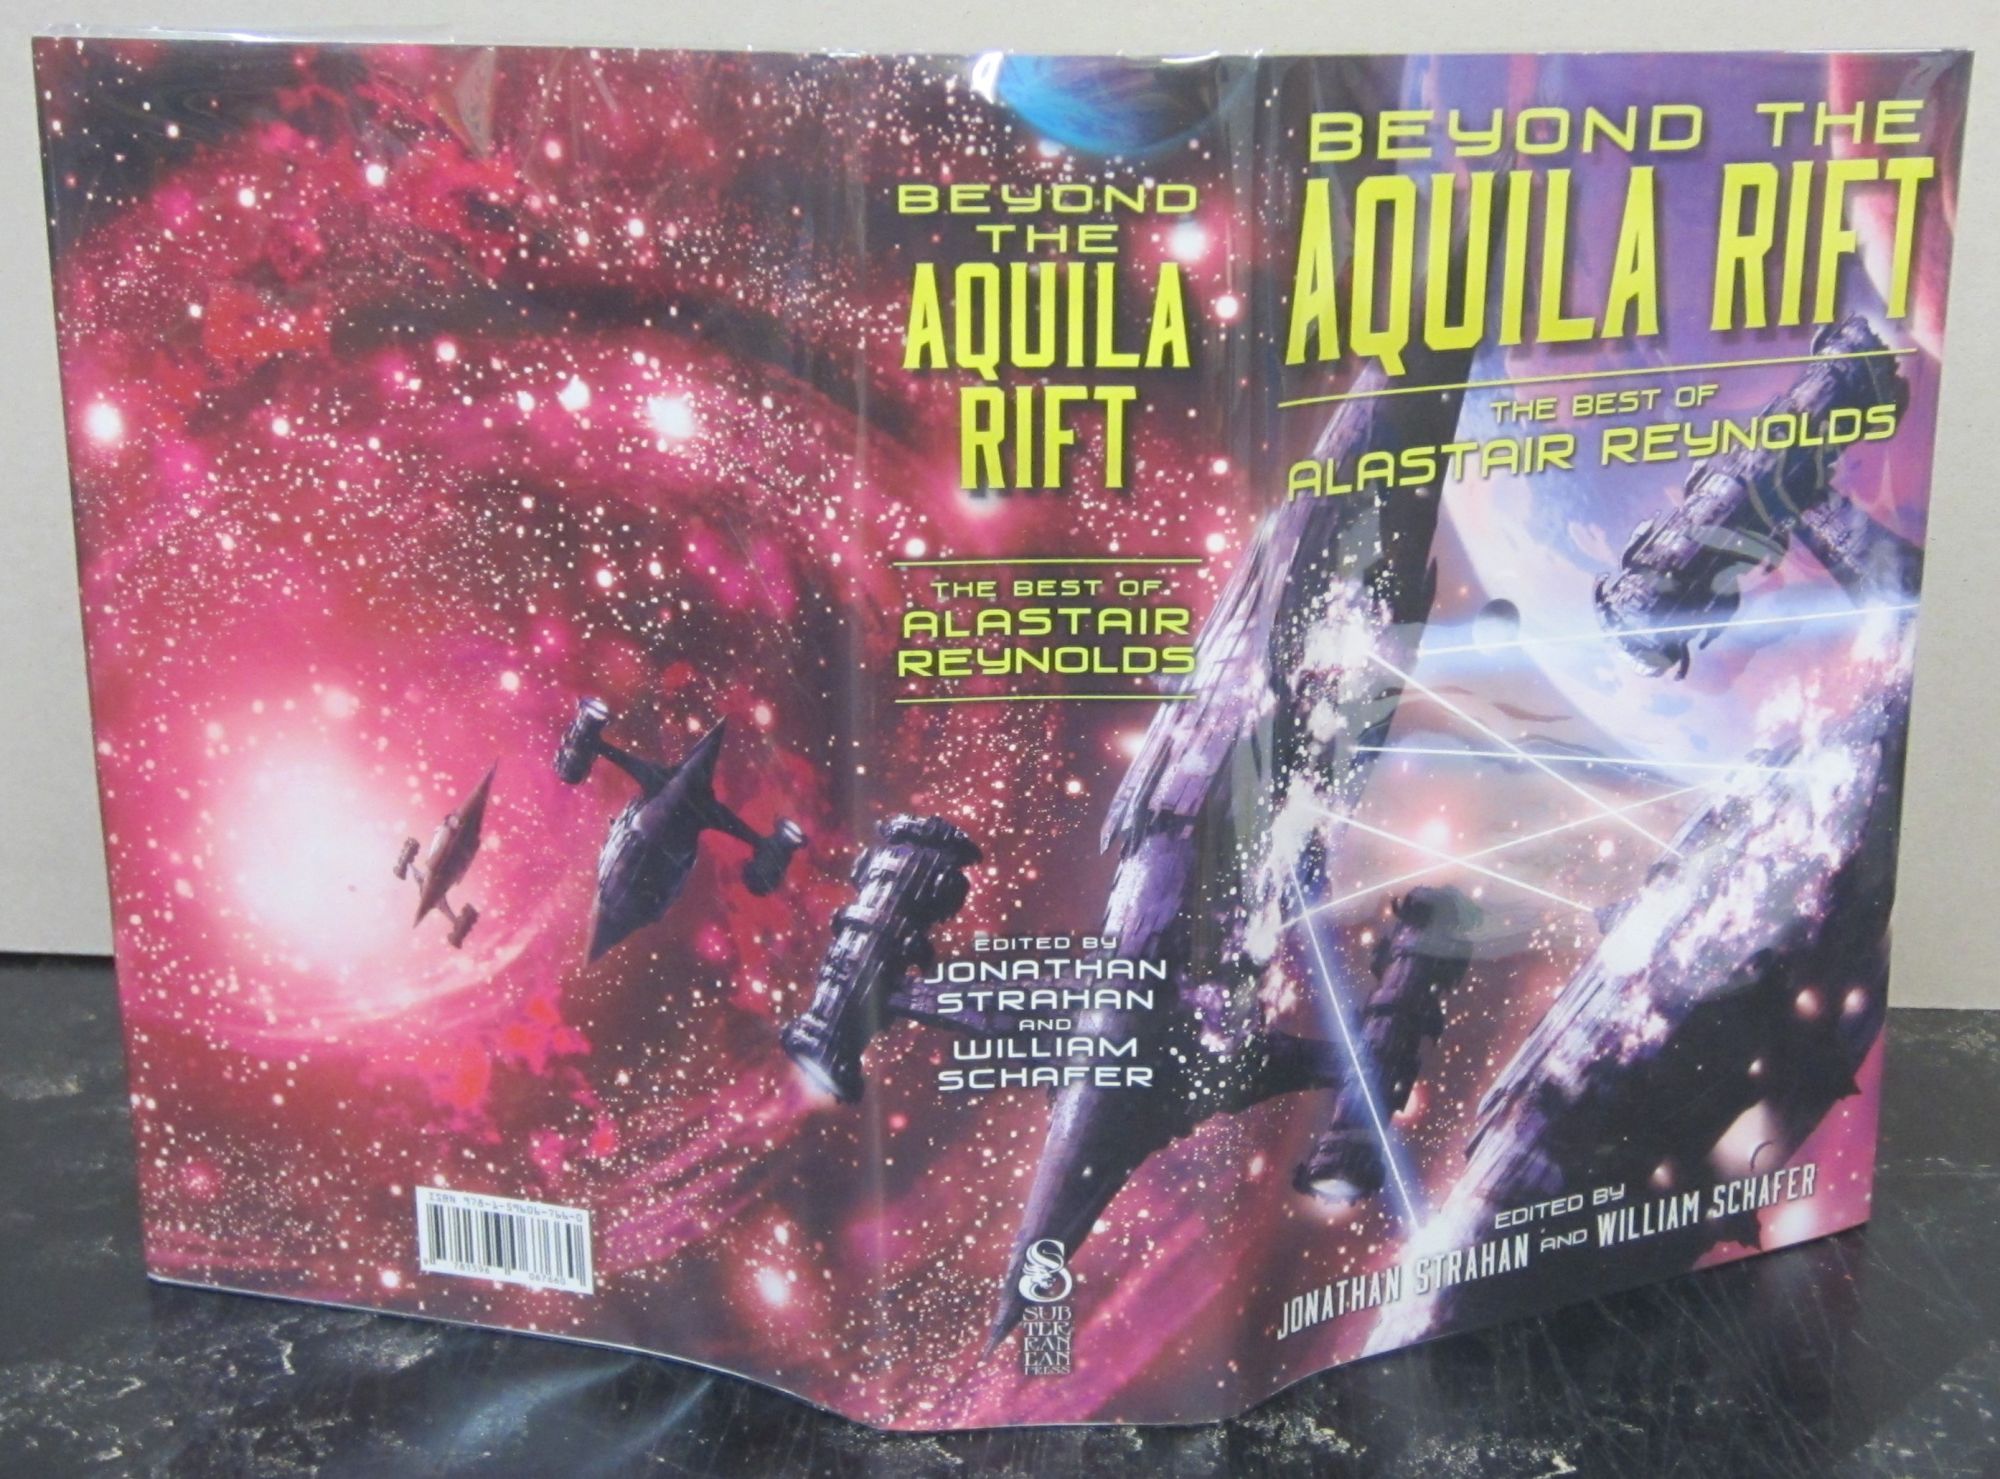 Beyond the Aquila Rift: The Best of Alastair Reynolds, Alastair Reynolds,  Jonathan Strahan, William Schafer, ed